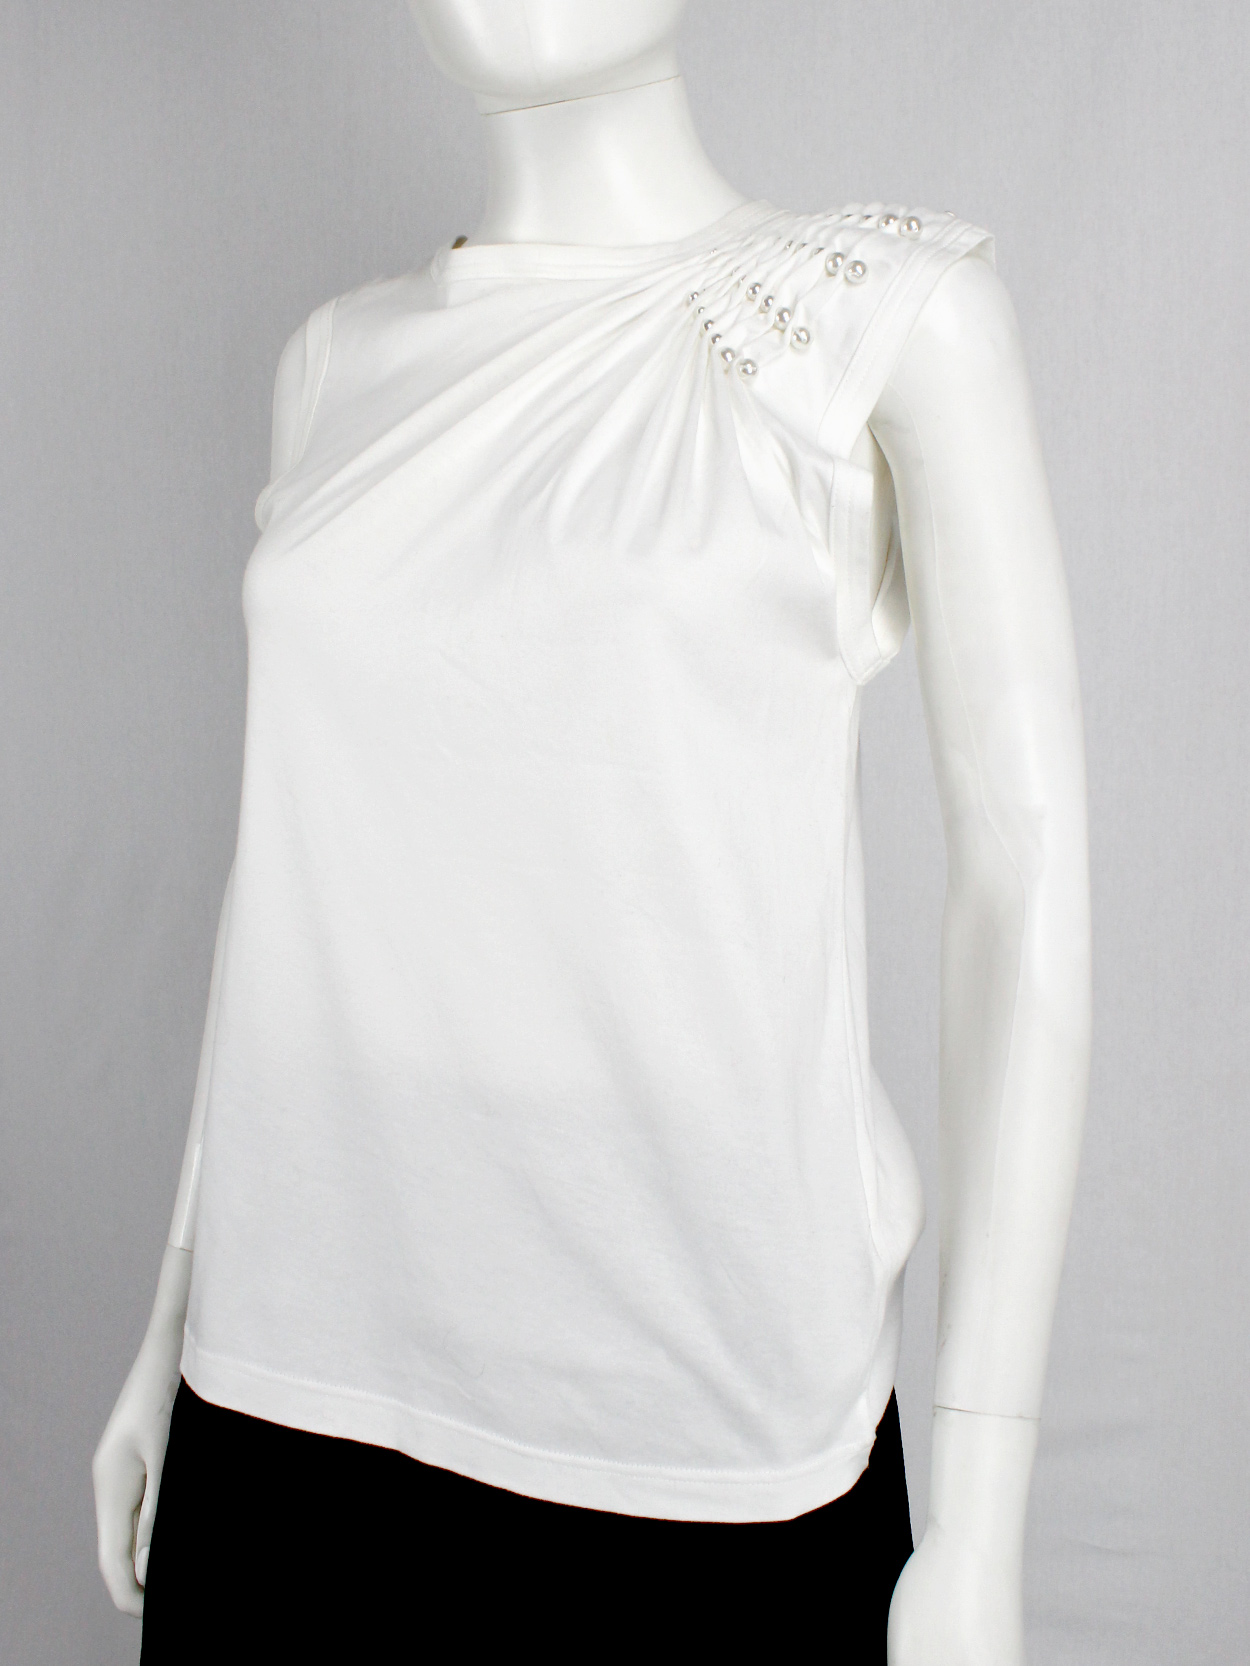 vaniitas Noir Kei Ninomiya white top with the shoulder gathered by rows of pearls (2)